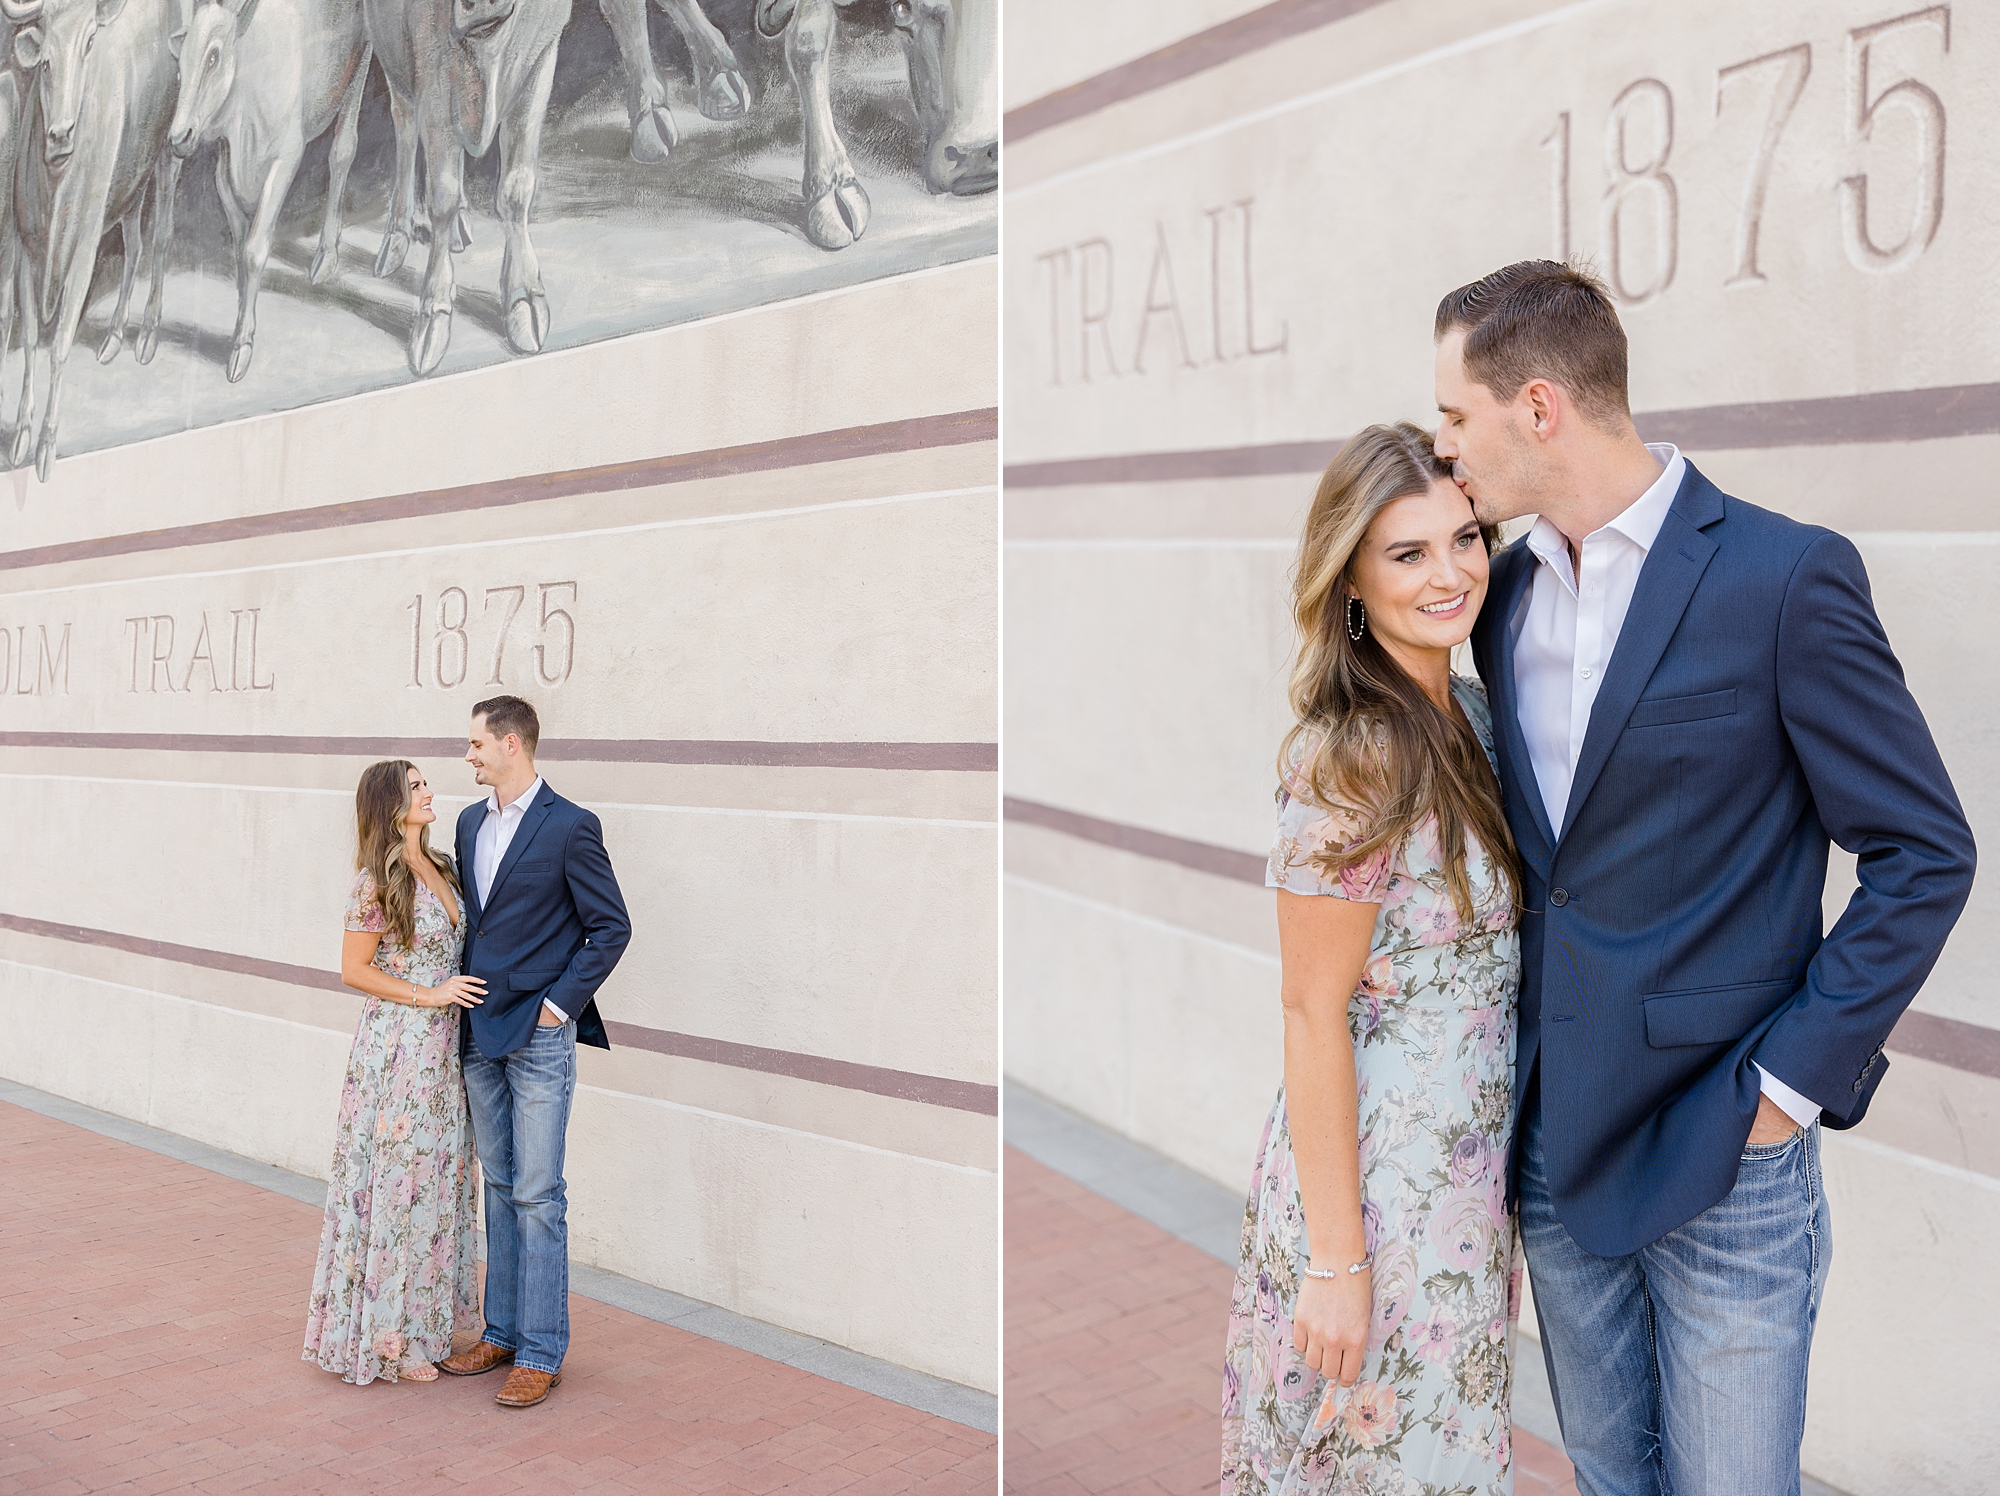 groom in navy jacket kisses bride's forehead by Chisholm Trail mural